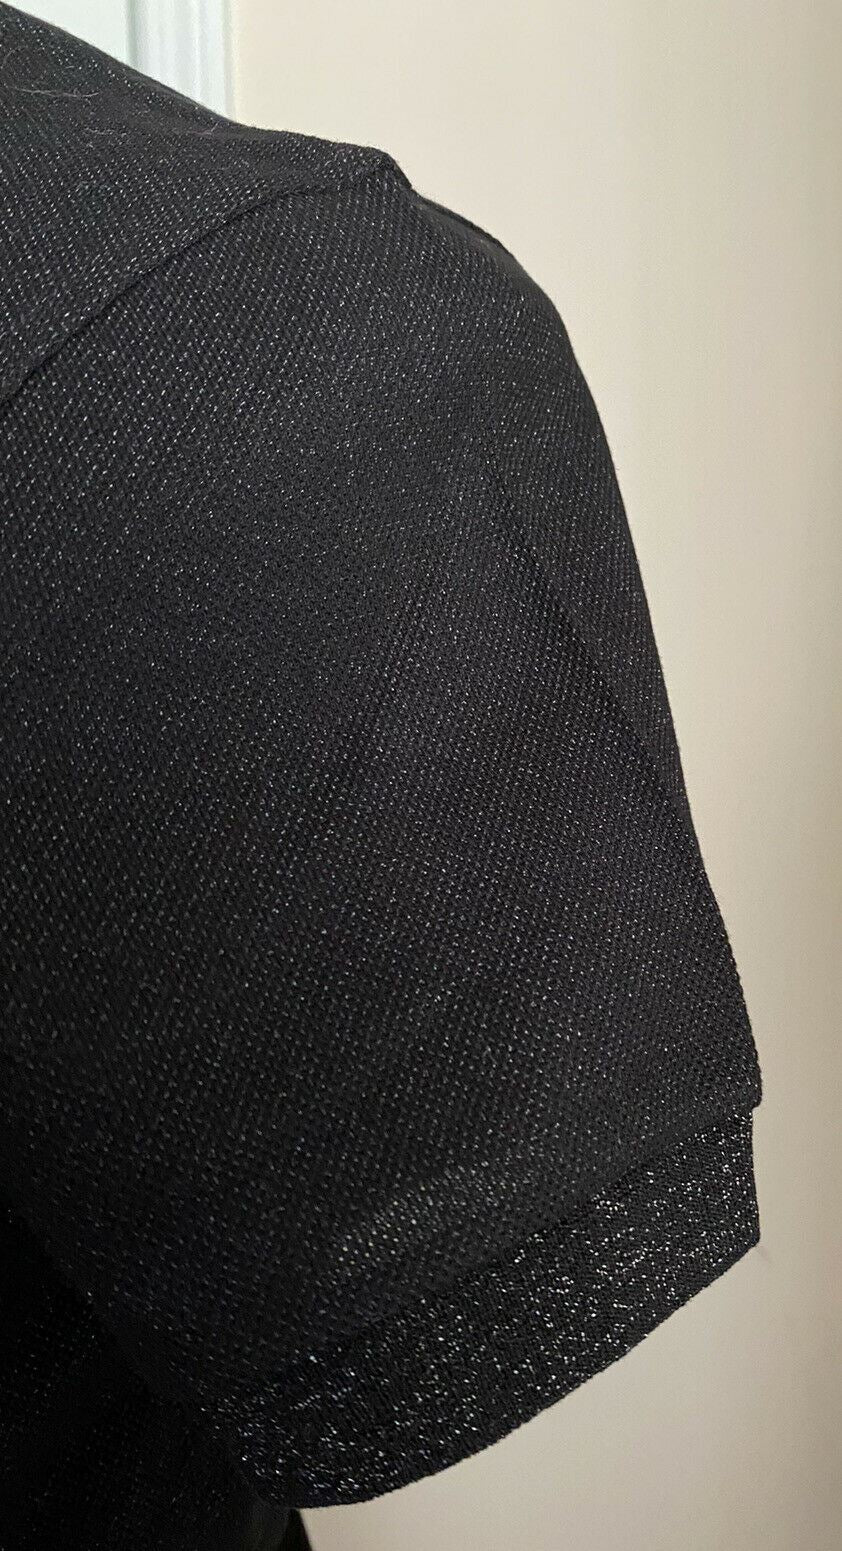 NWT Saint Laurent YSL Printed Mens Polo Shirt Black Size S Italy